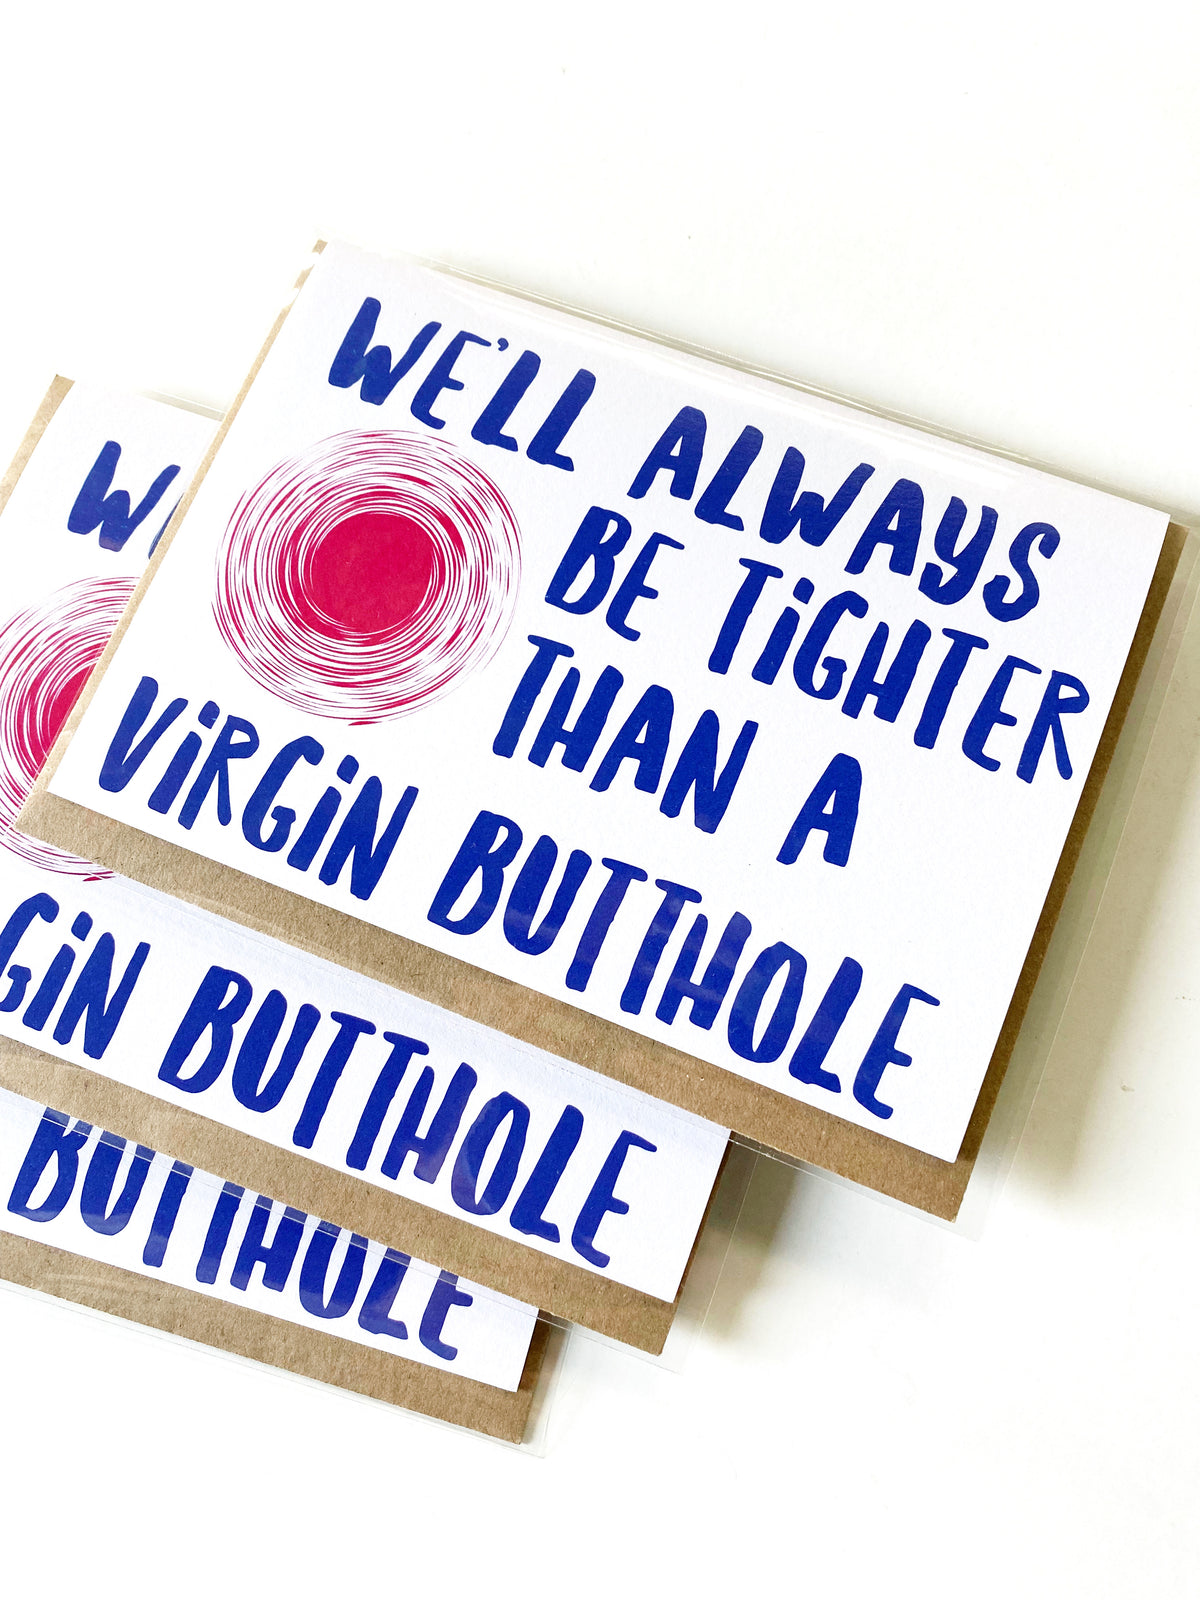 Virgin Butthole Funny Friendship Card